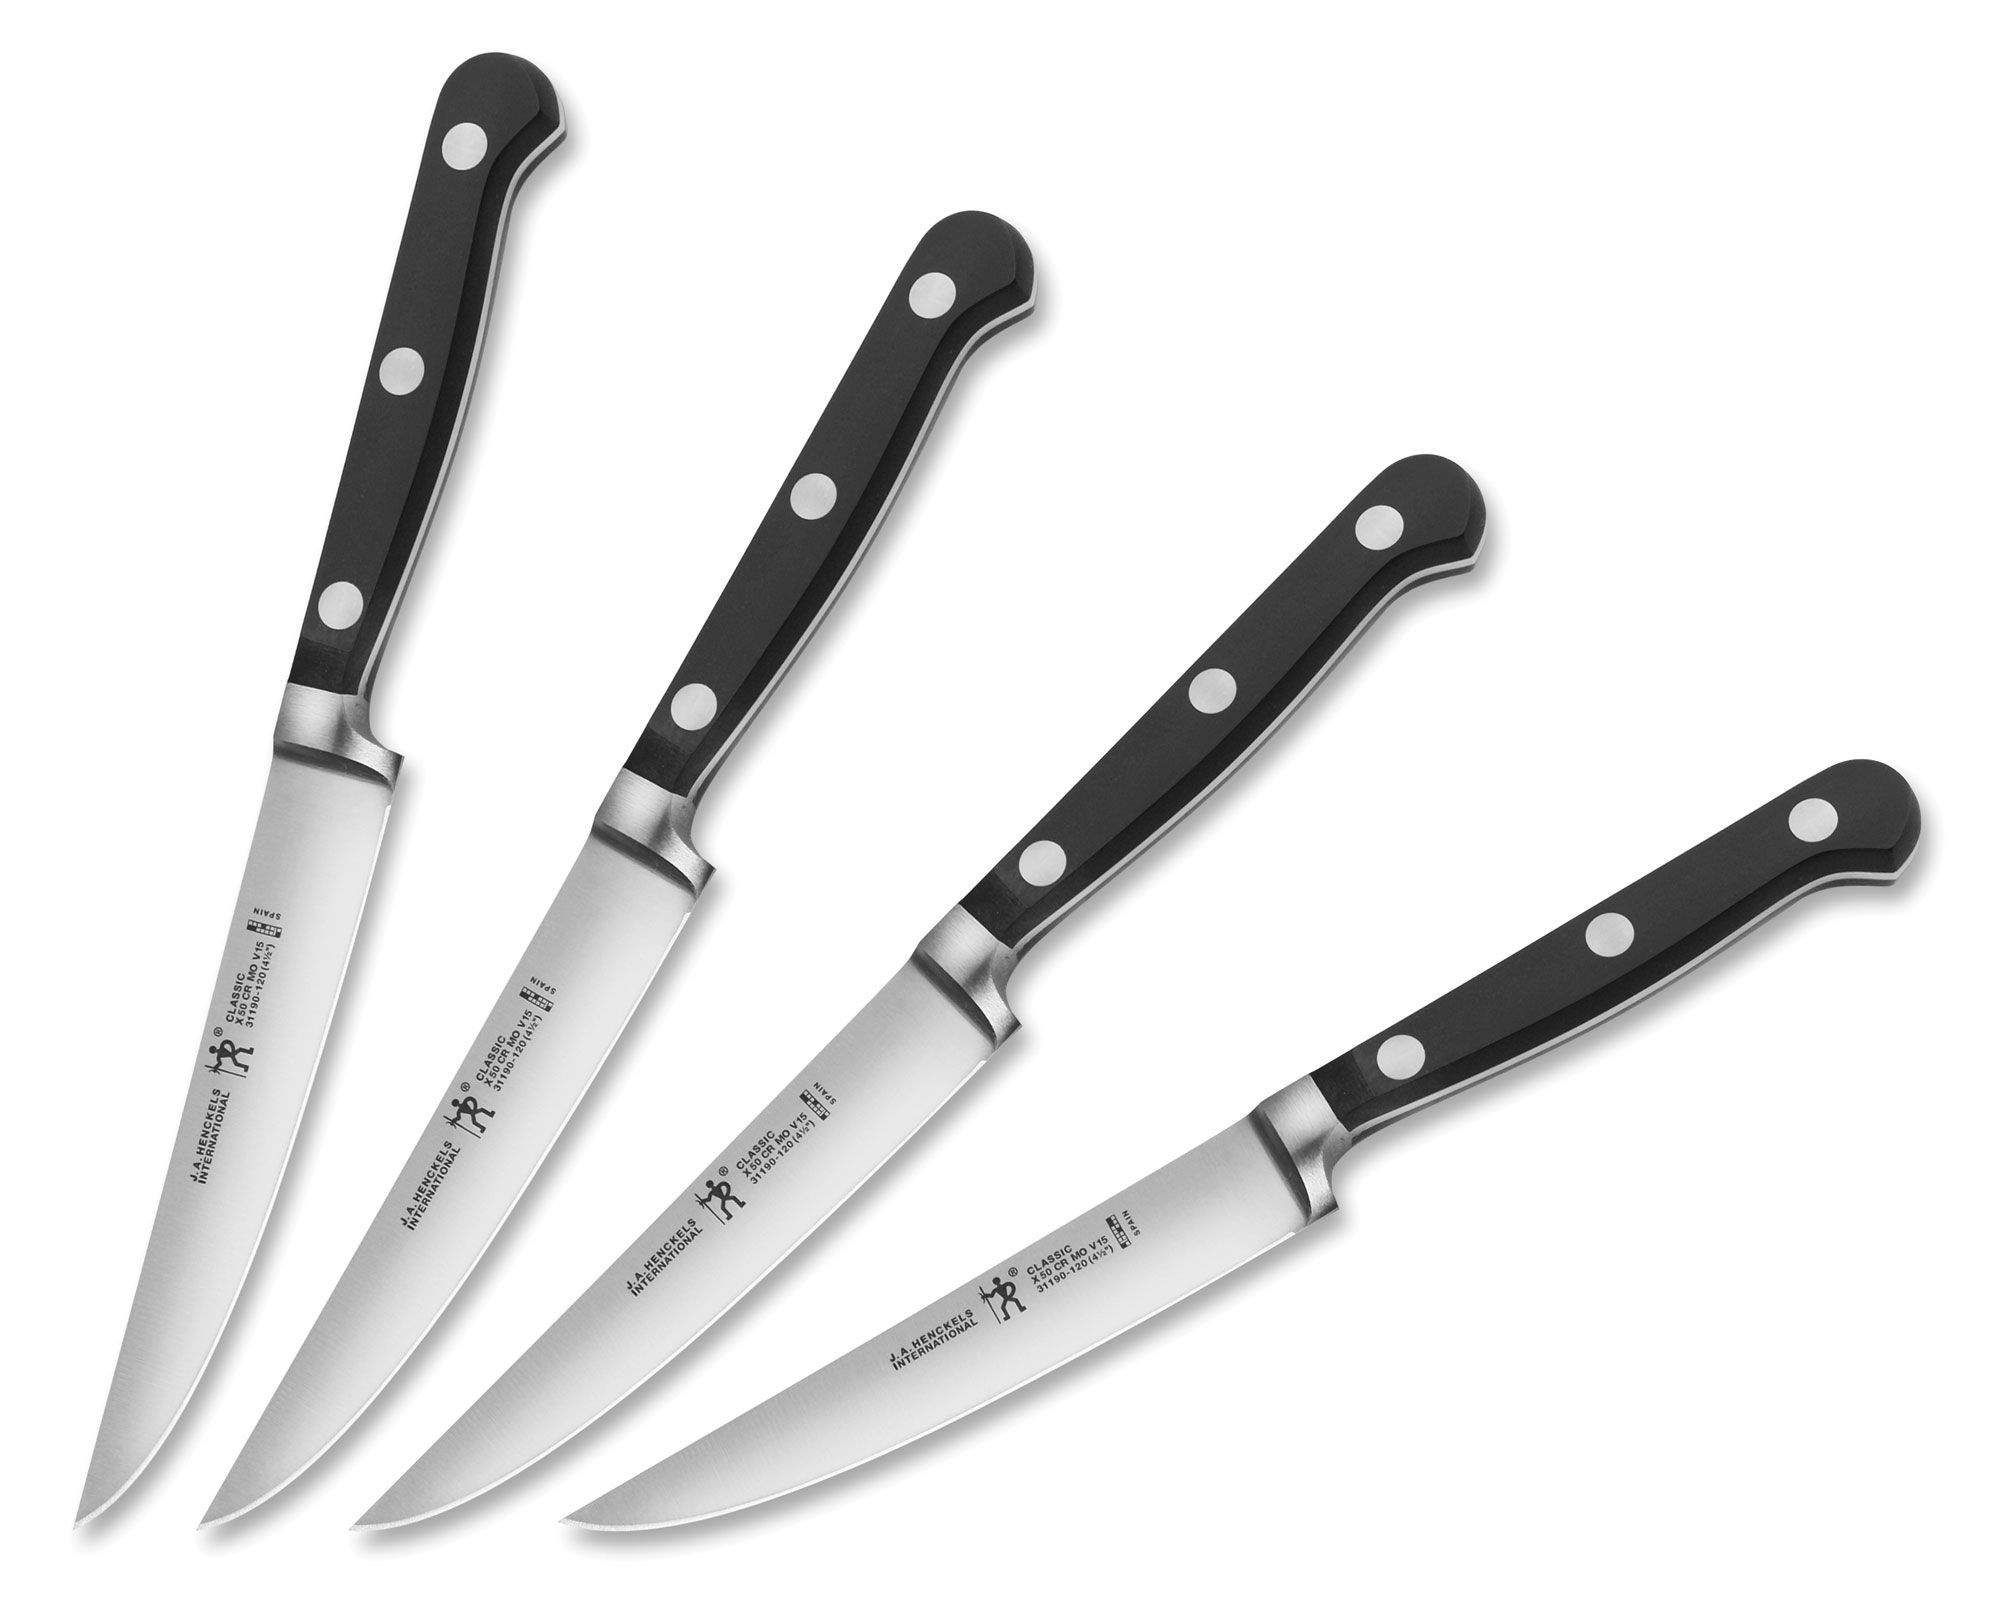 Chef Series 4 Pc Steak Knife Set | Hessler World Wide